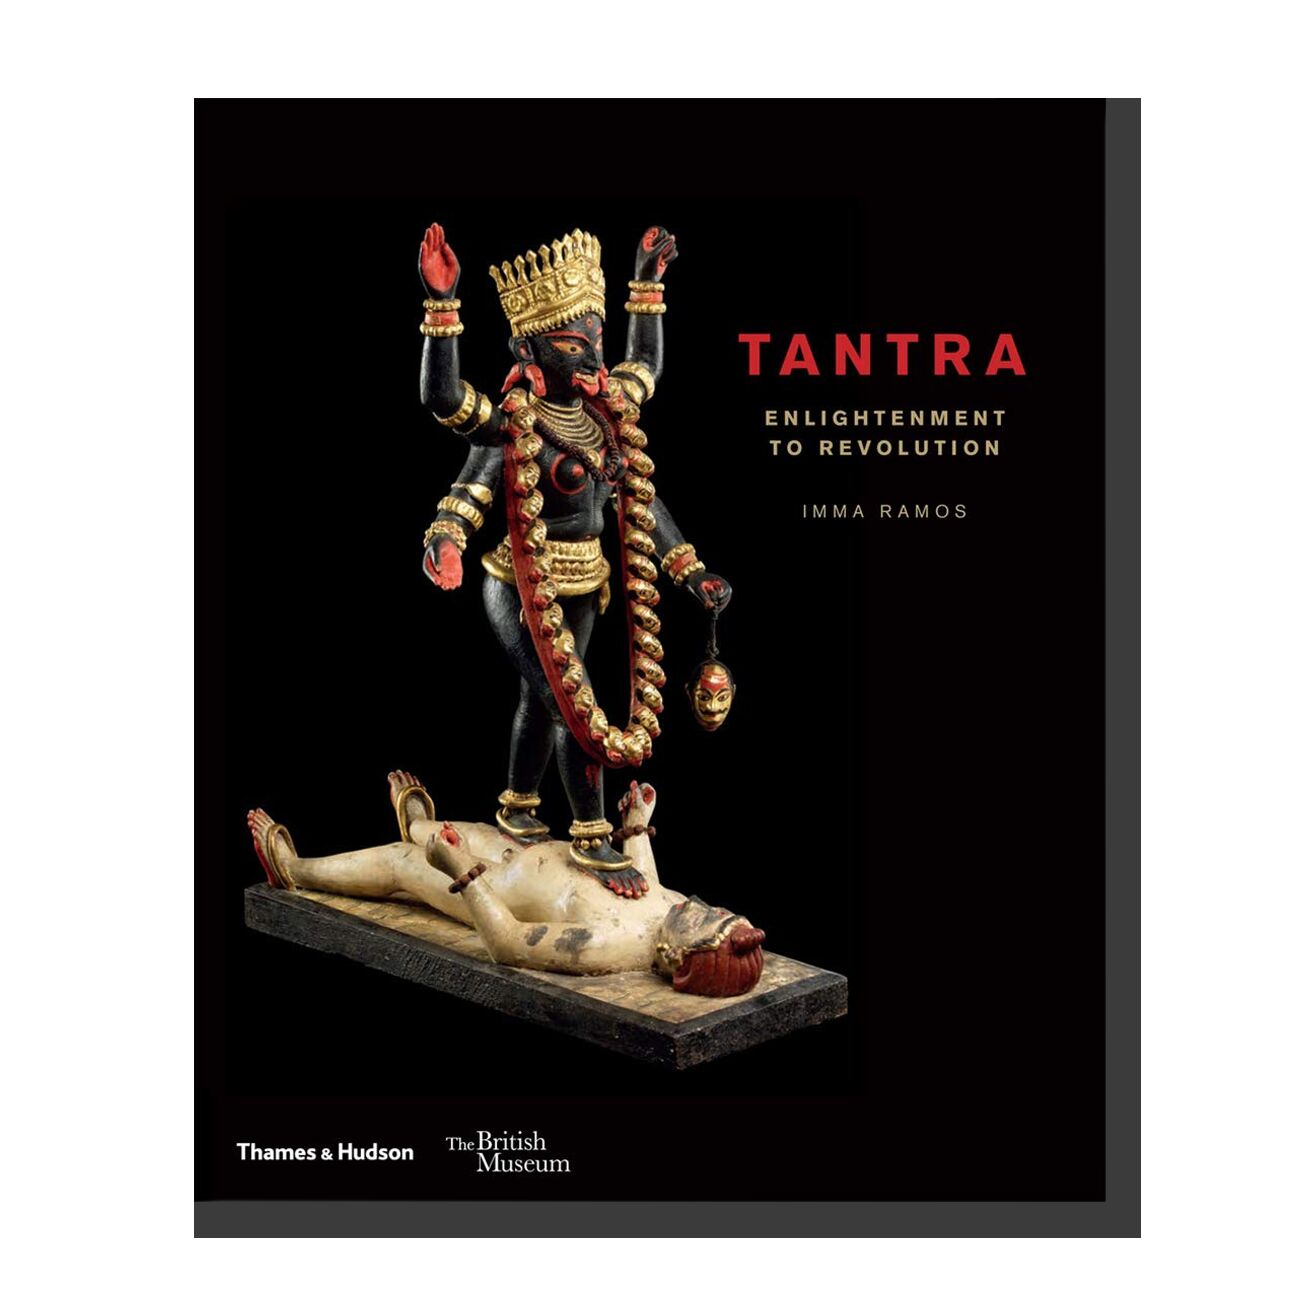 Tantra: Enlightenment to Revolution